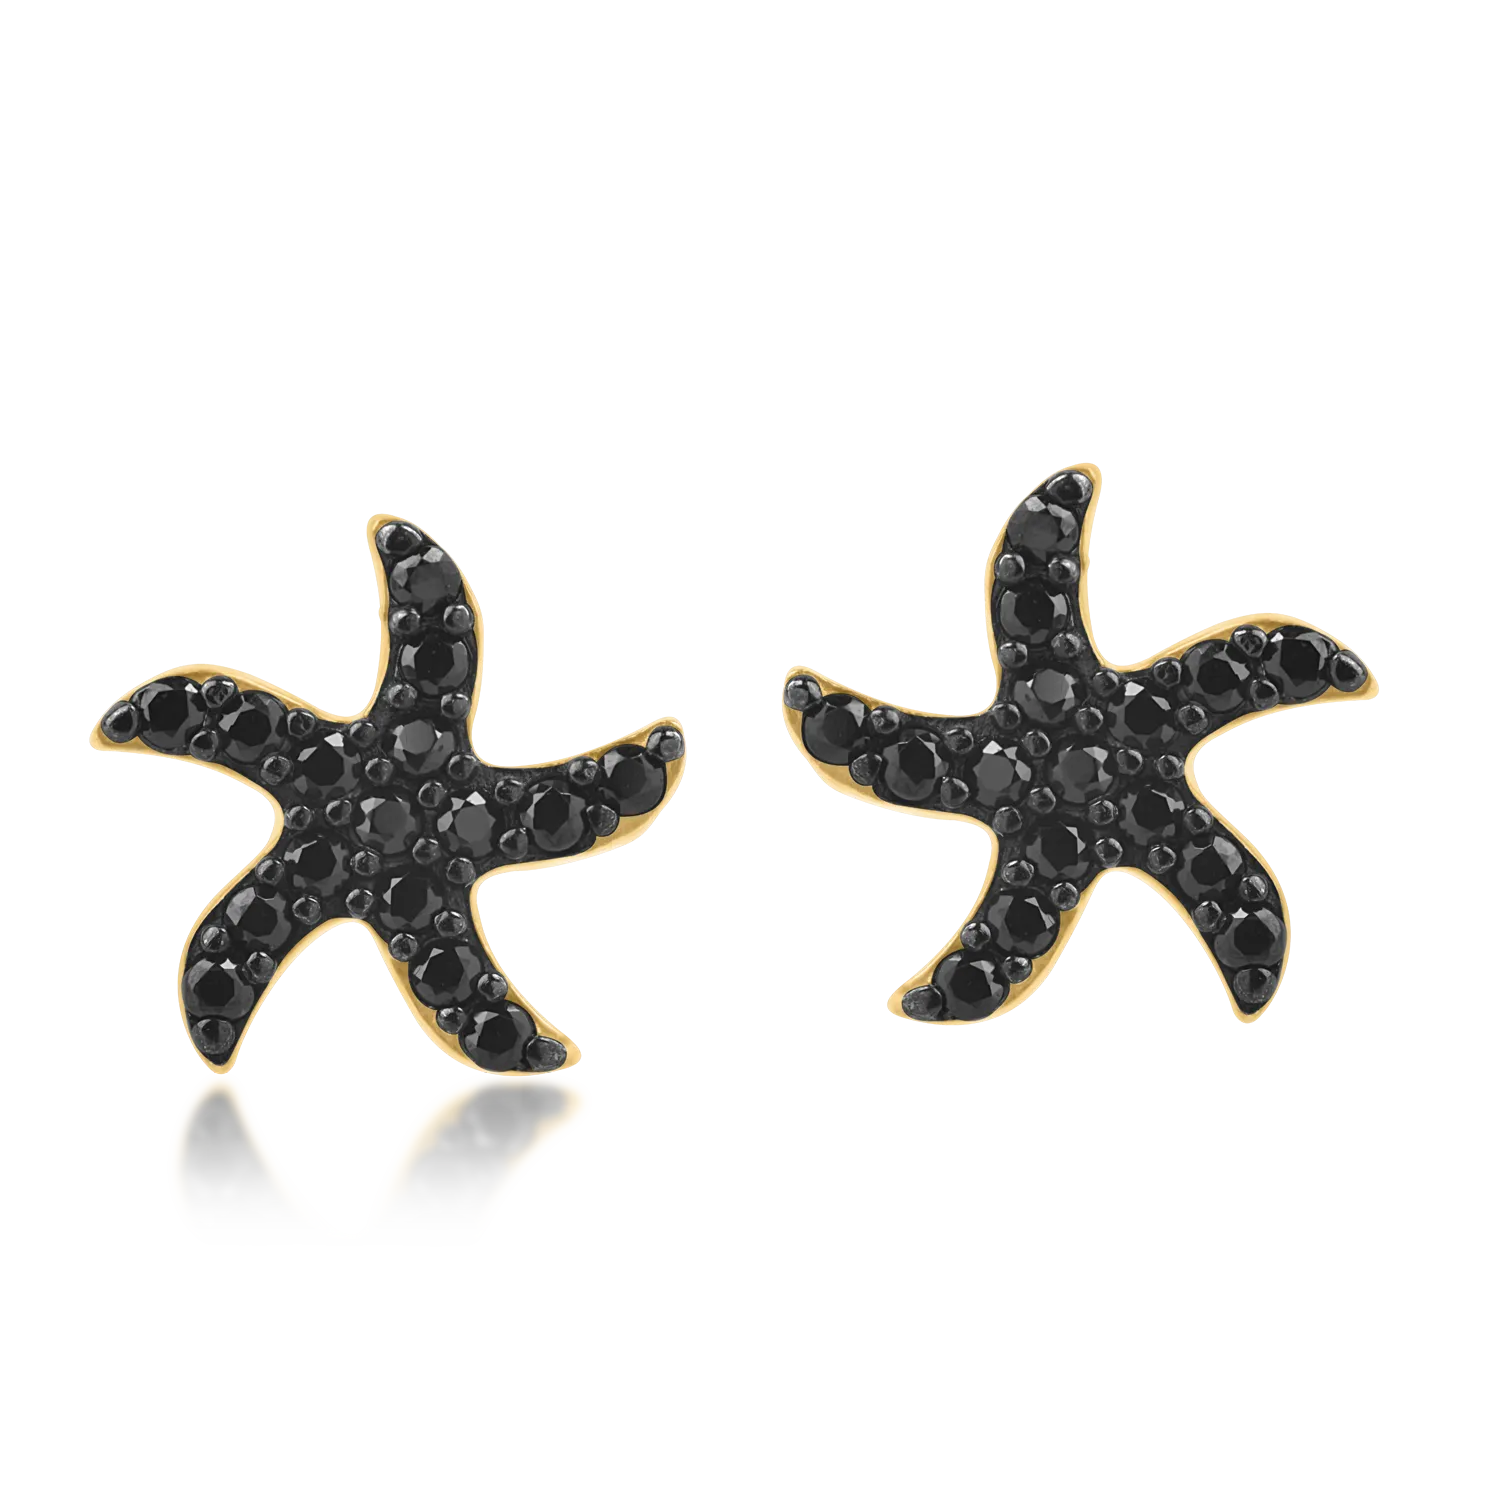 Yellow gold starfish earrings